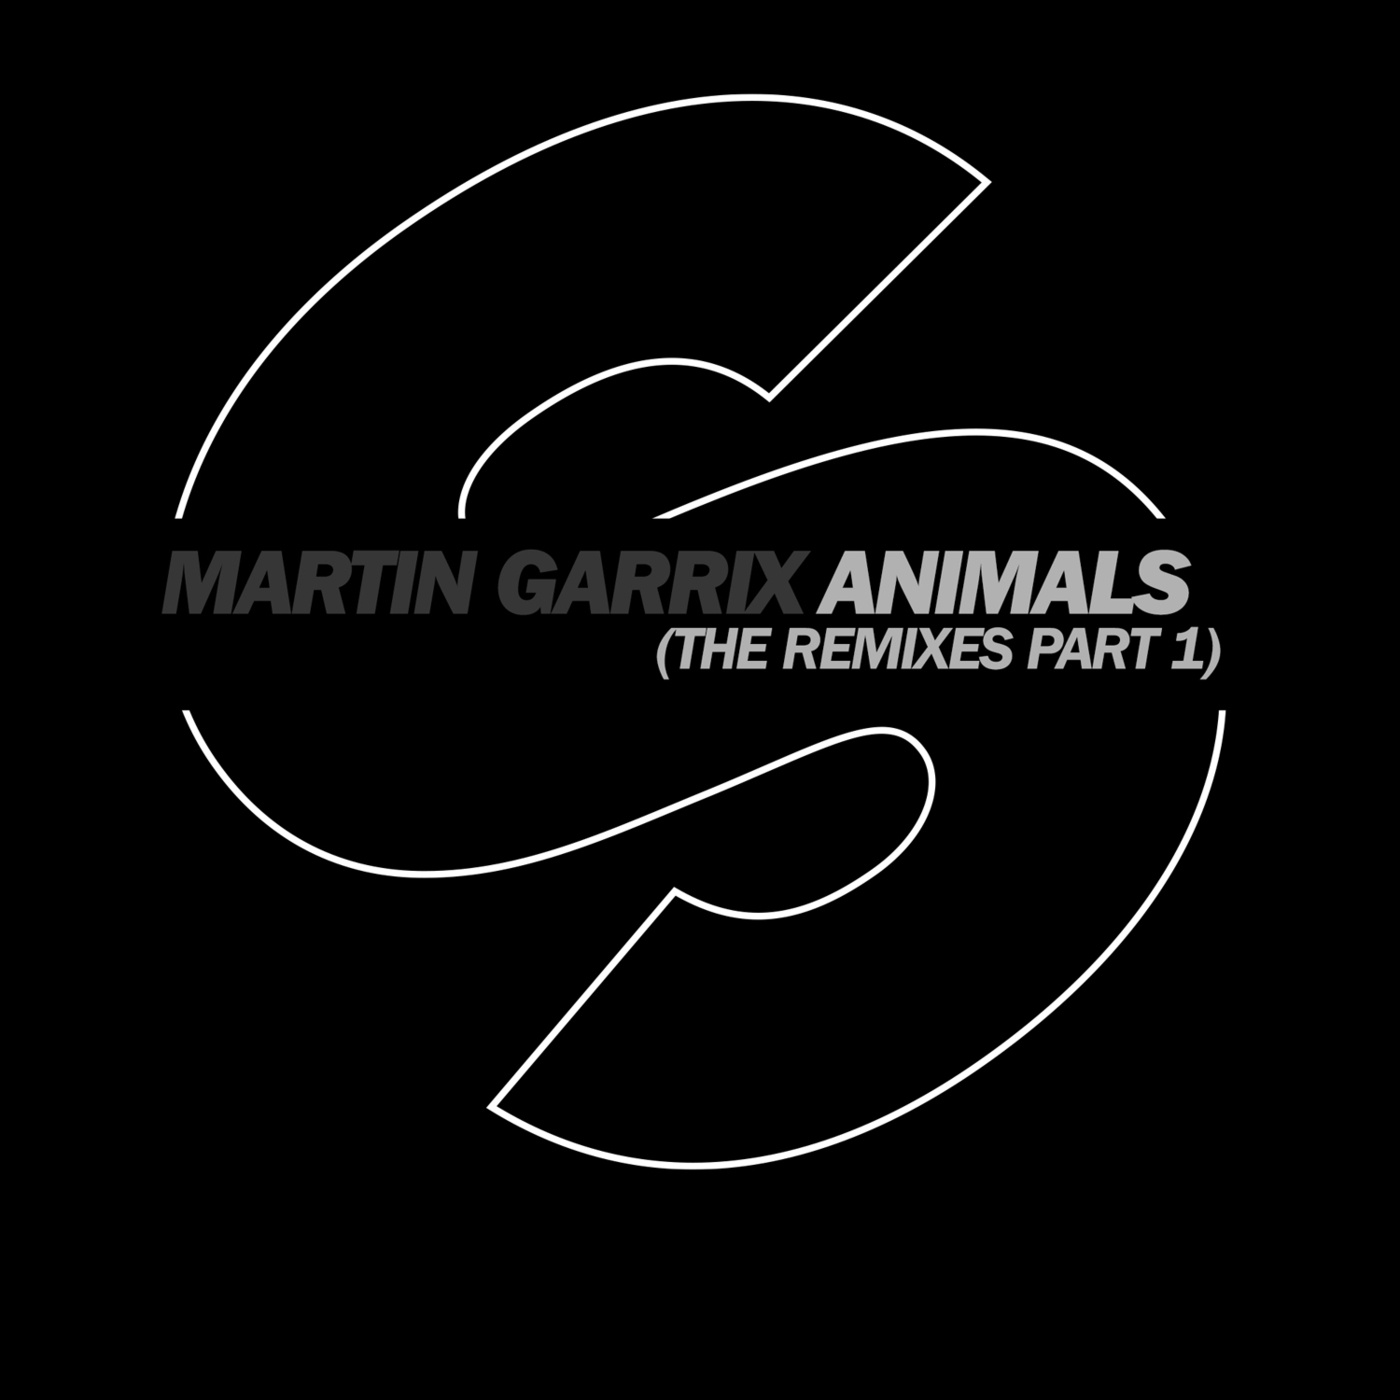 Animals (Radio Edit)